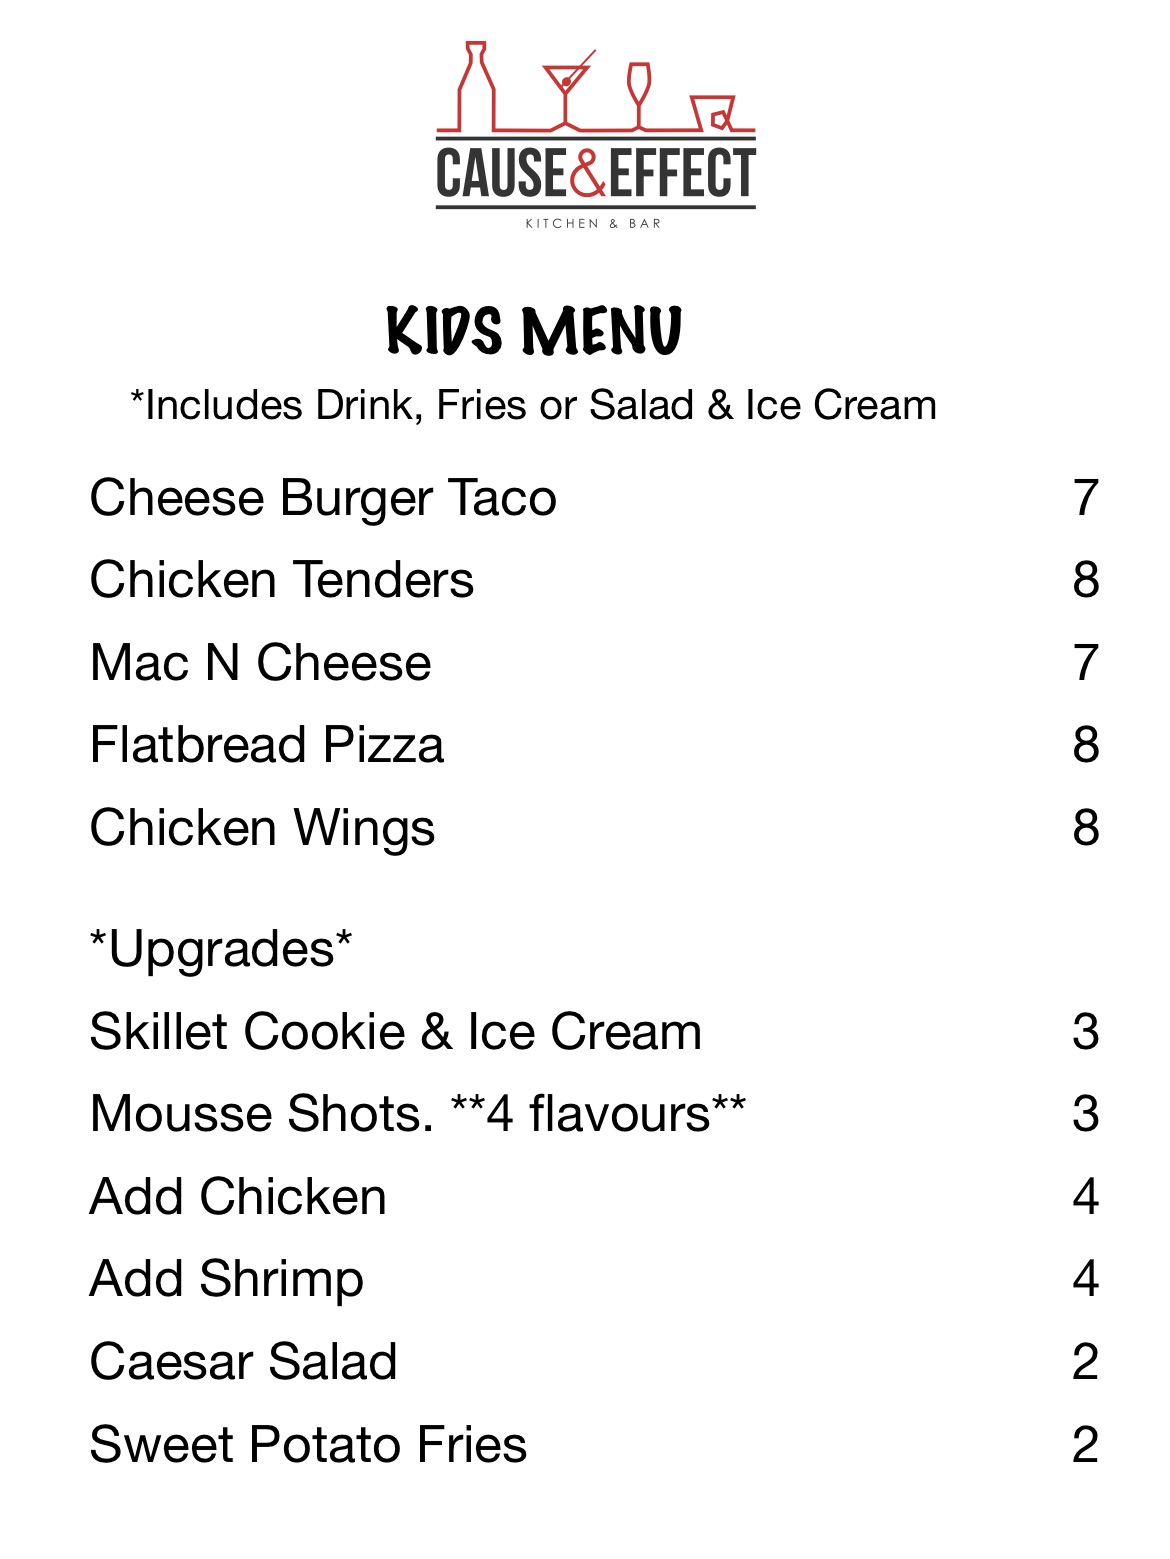 kids-menu-cause-effect-kitchen-bar